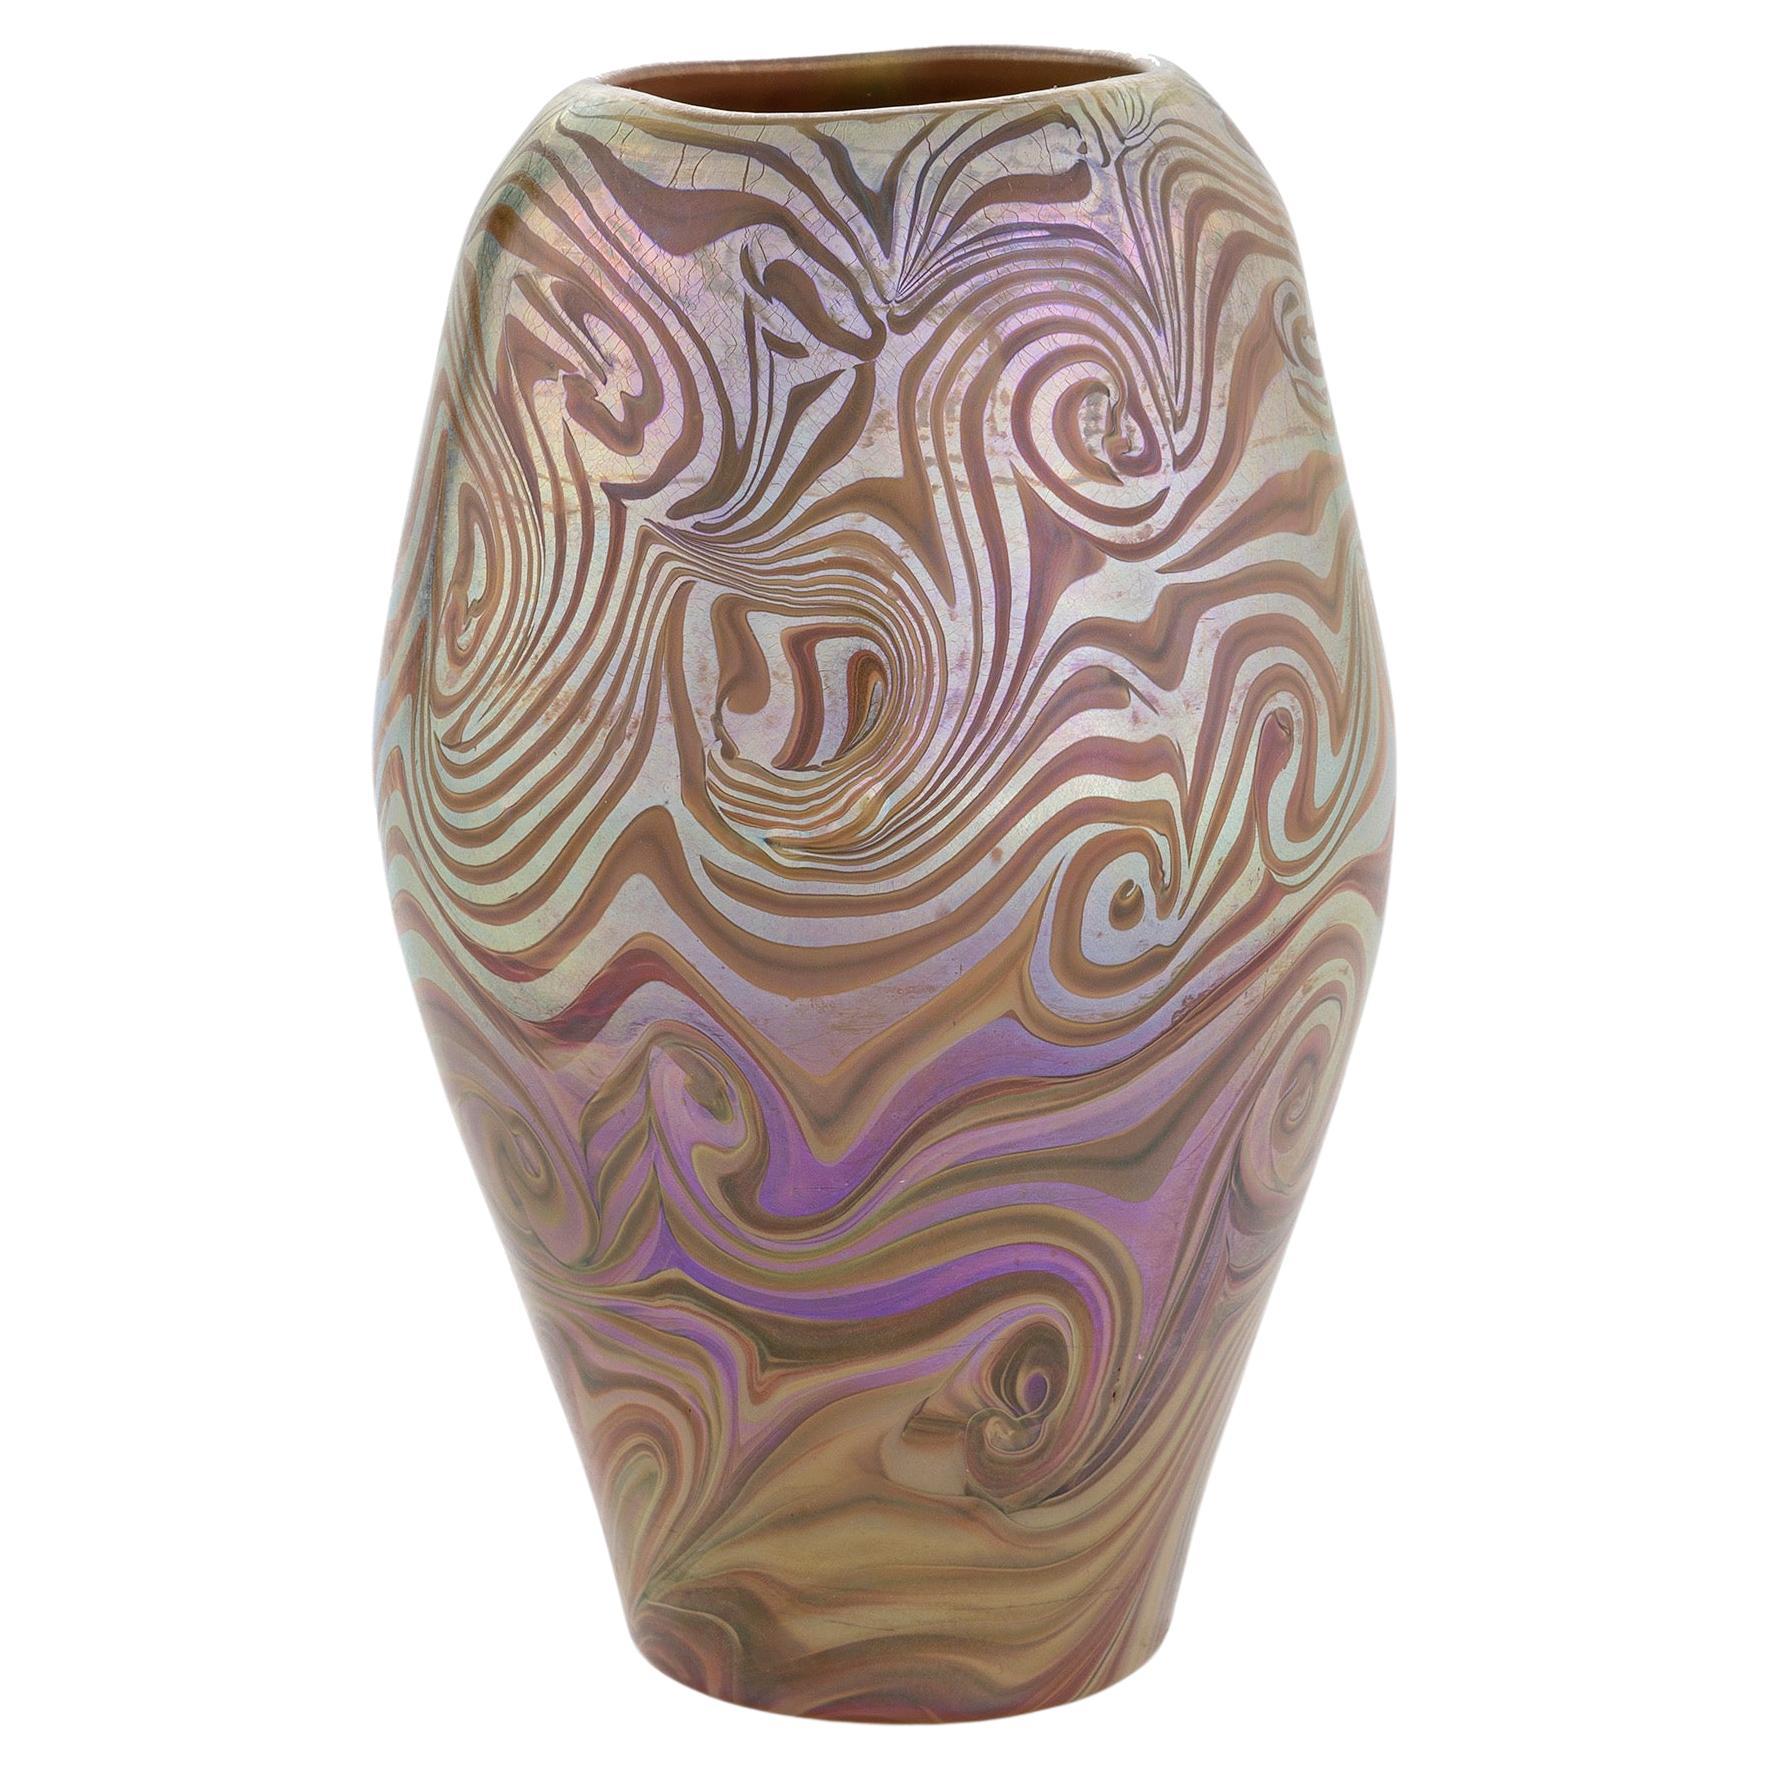 Tiffany Studios New York "Damascene" Favrile Glass Vase For Sale